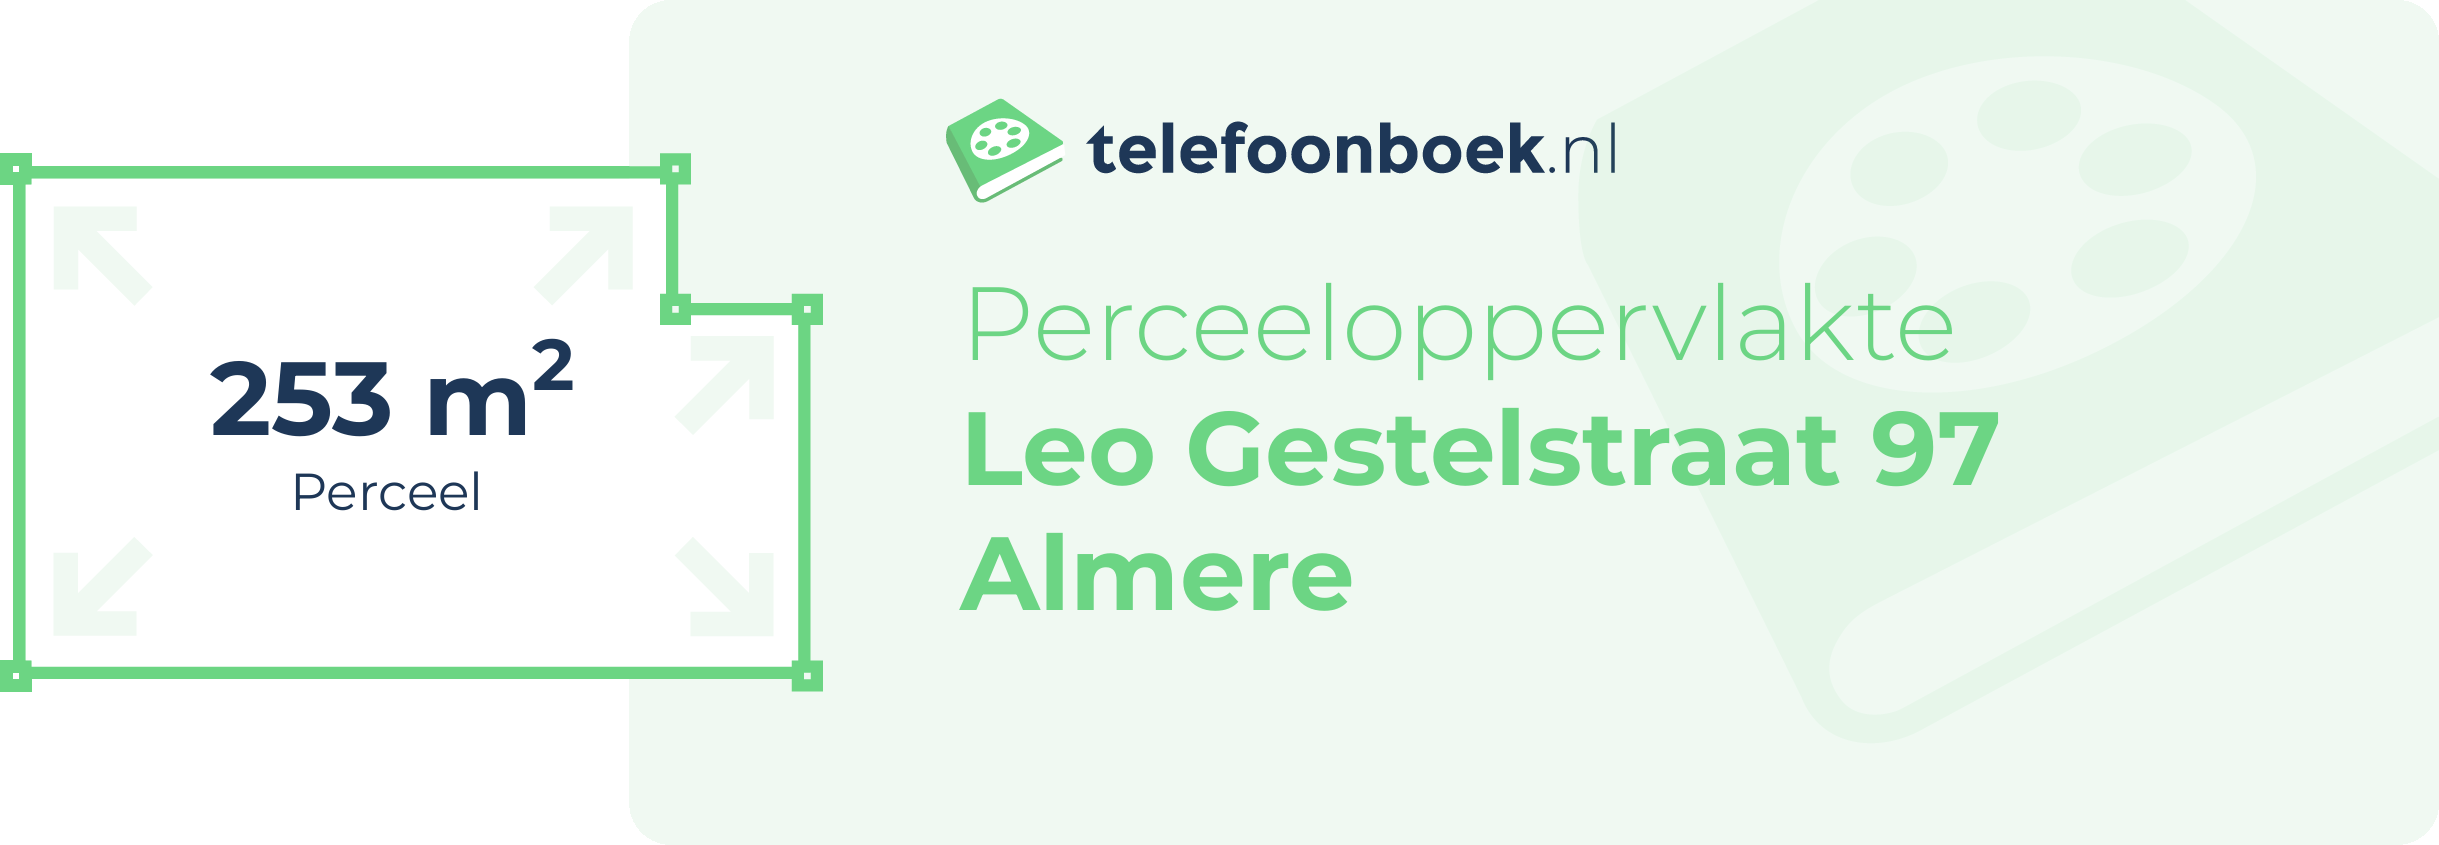 Perceeloppervlakte Leo Gestelstraat 97 Almere